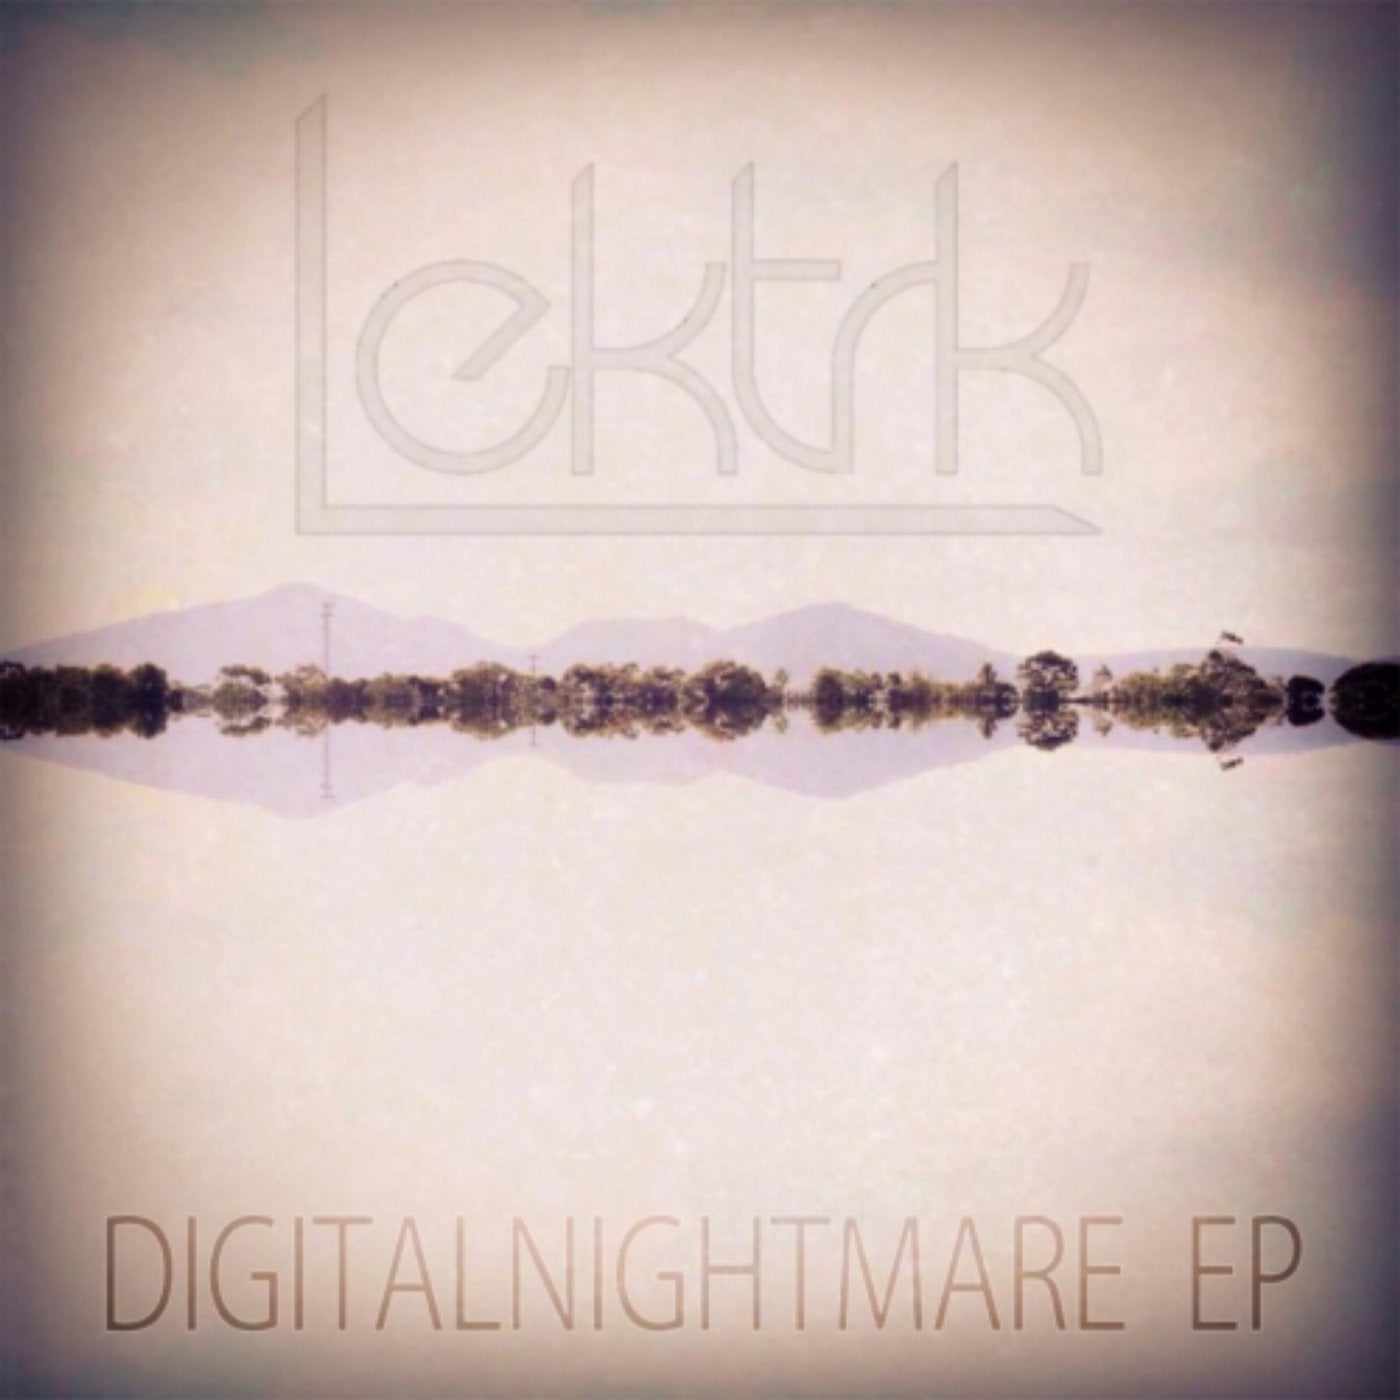 Digitalnightmare EP